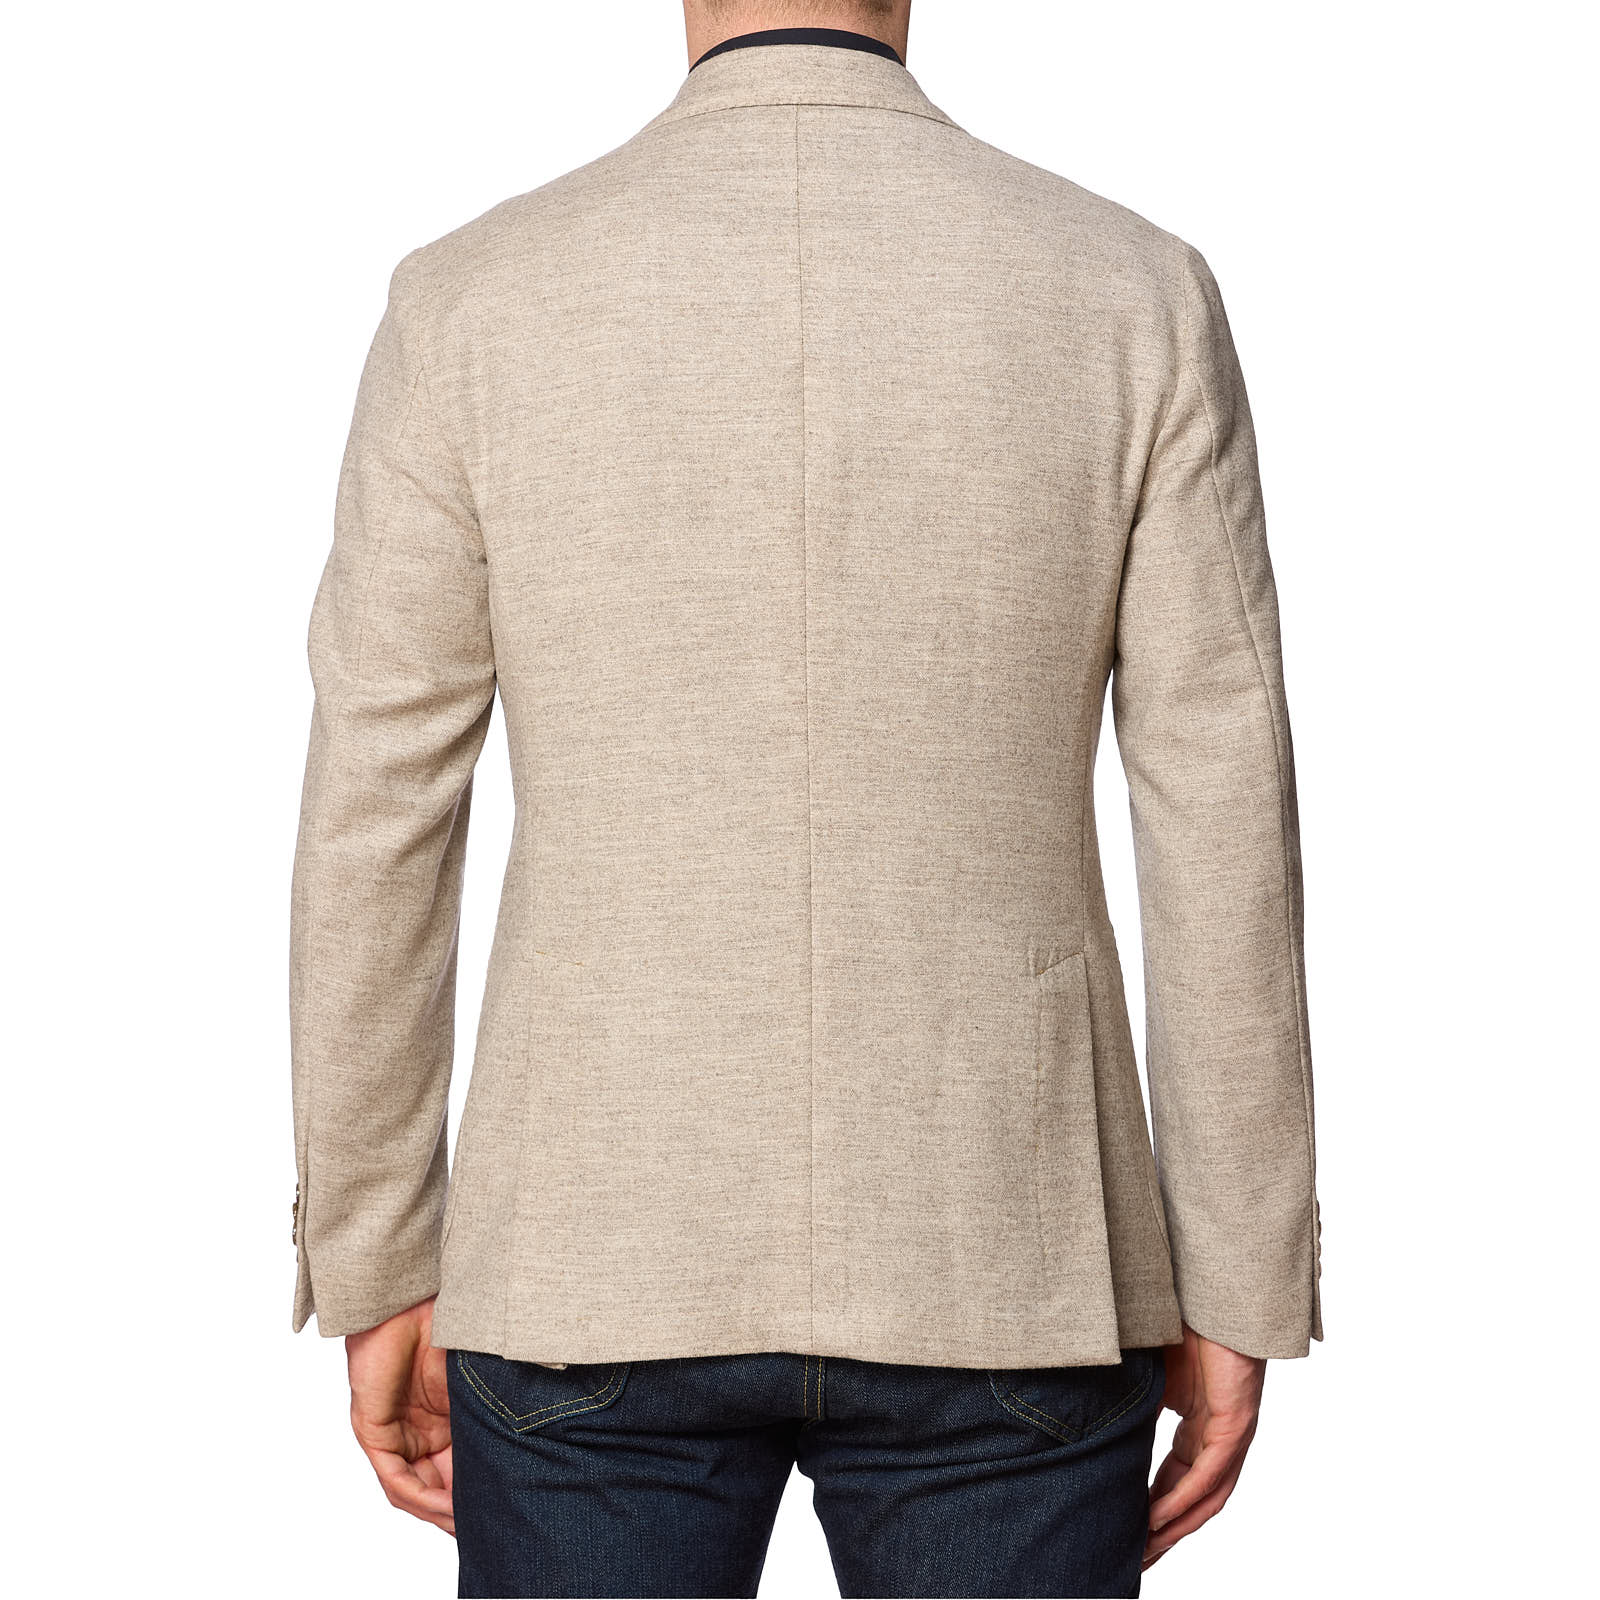 SARTORIA PARTENOPEA Beige Wool-Cashmere Unlined Jacket NEW  Current Model